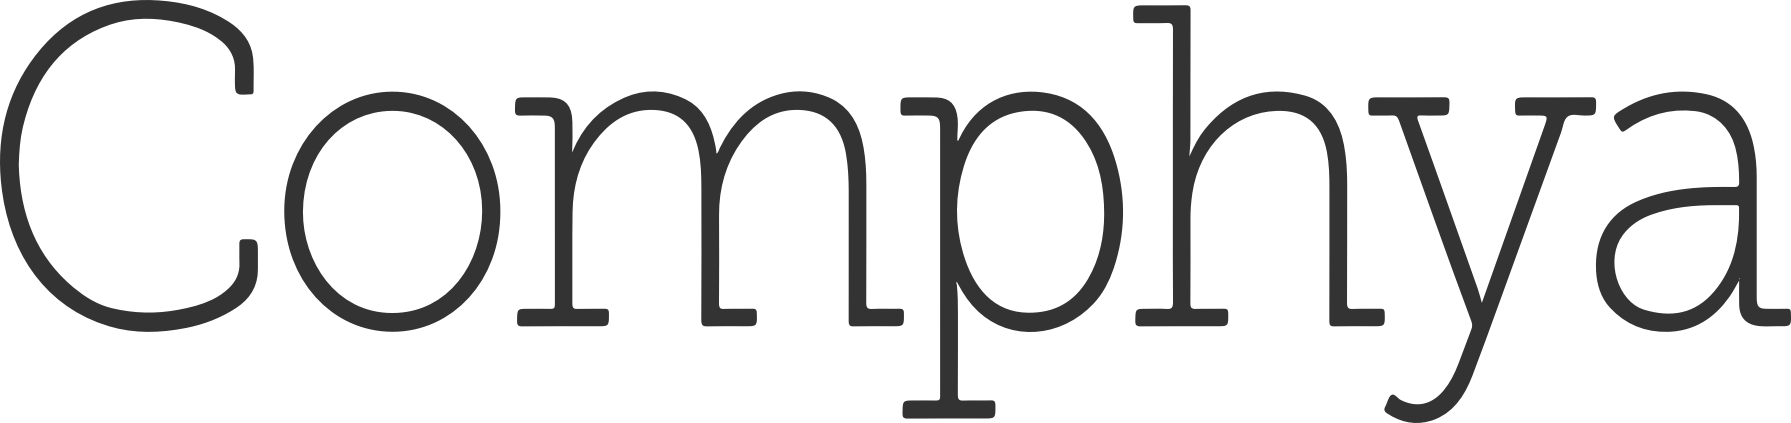 Comphya logo